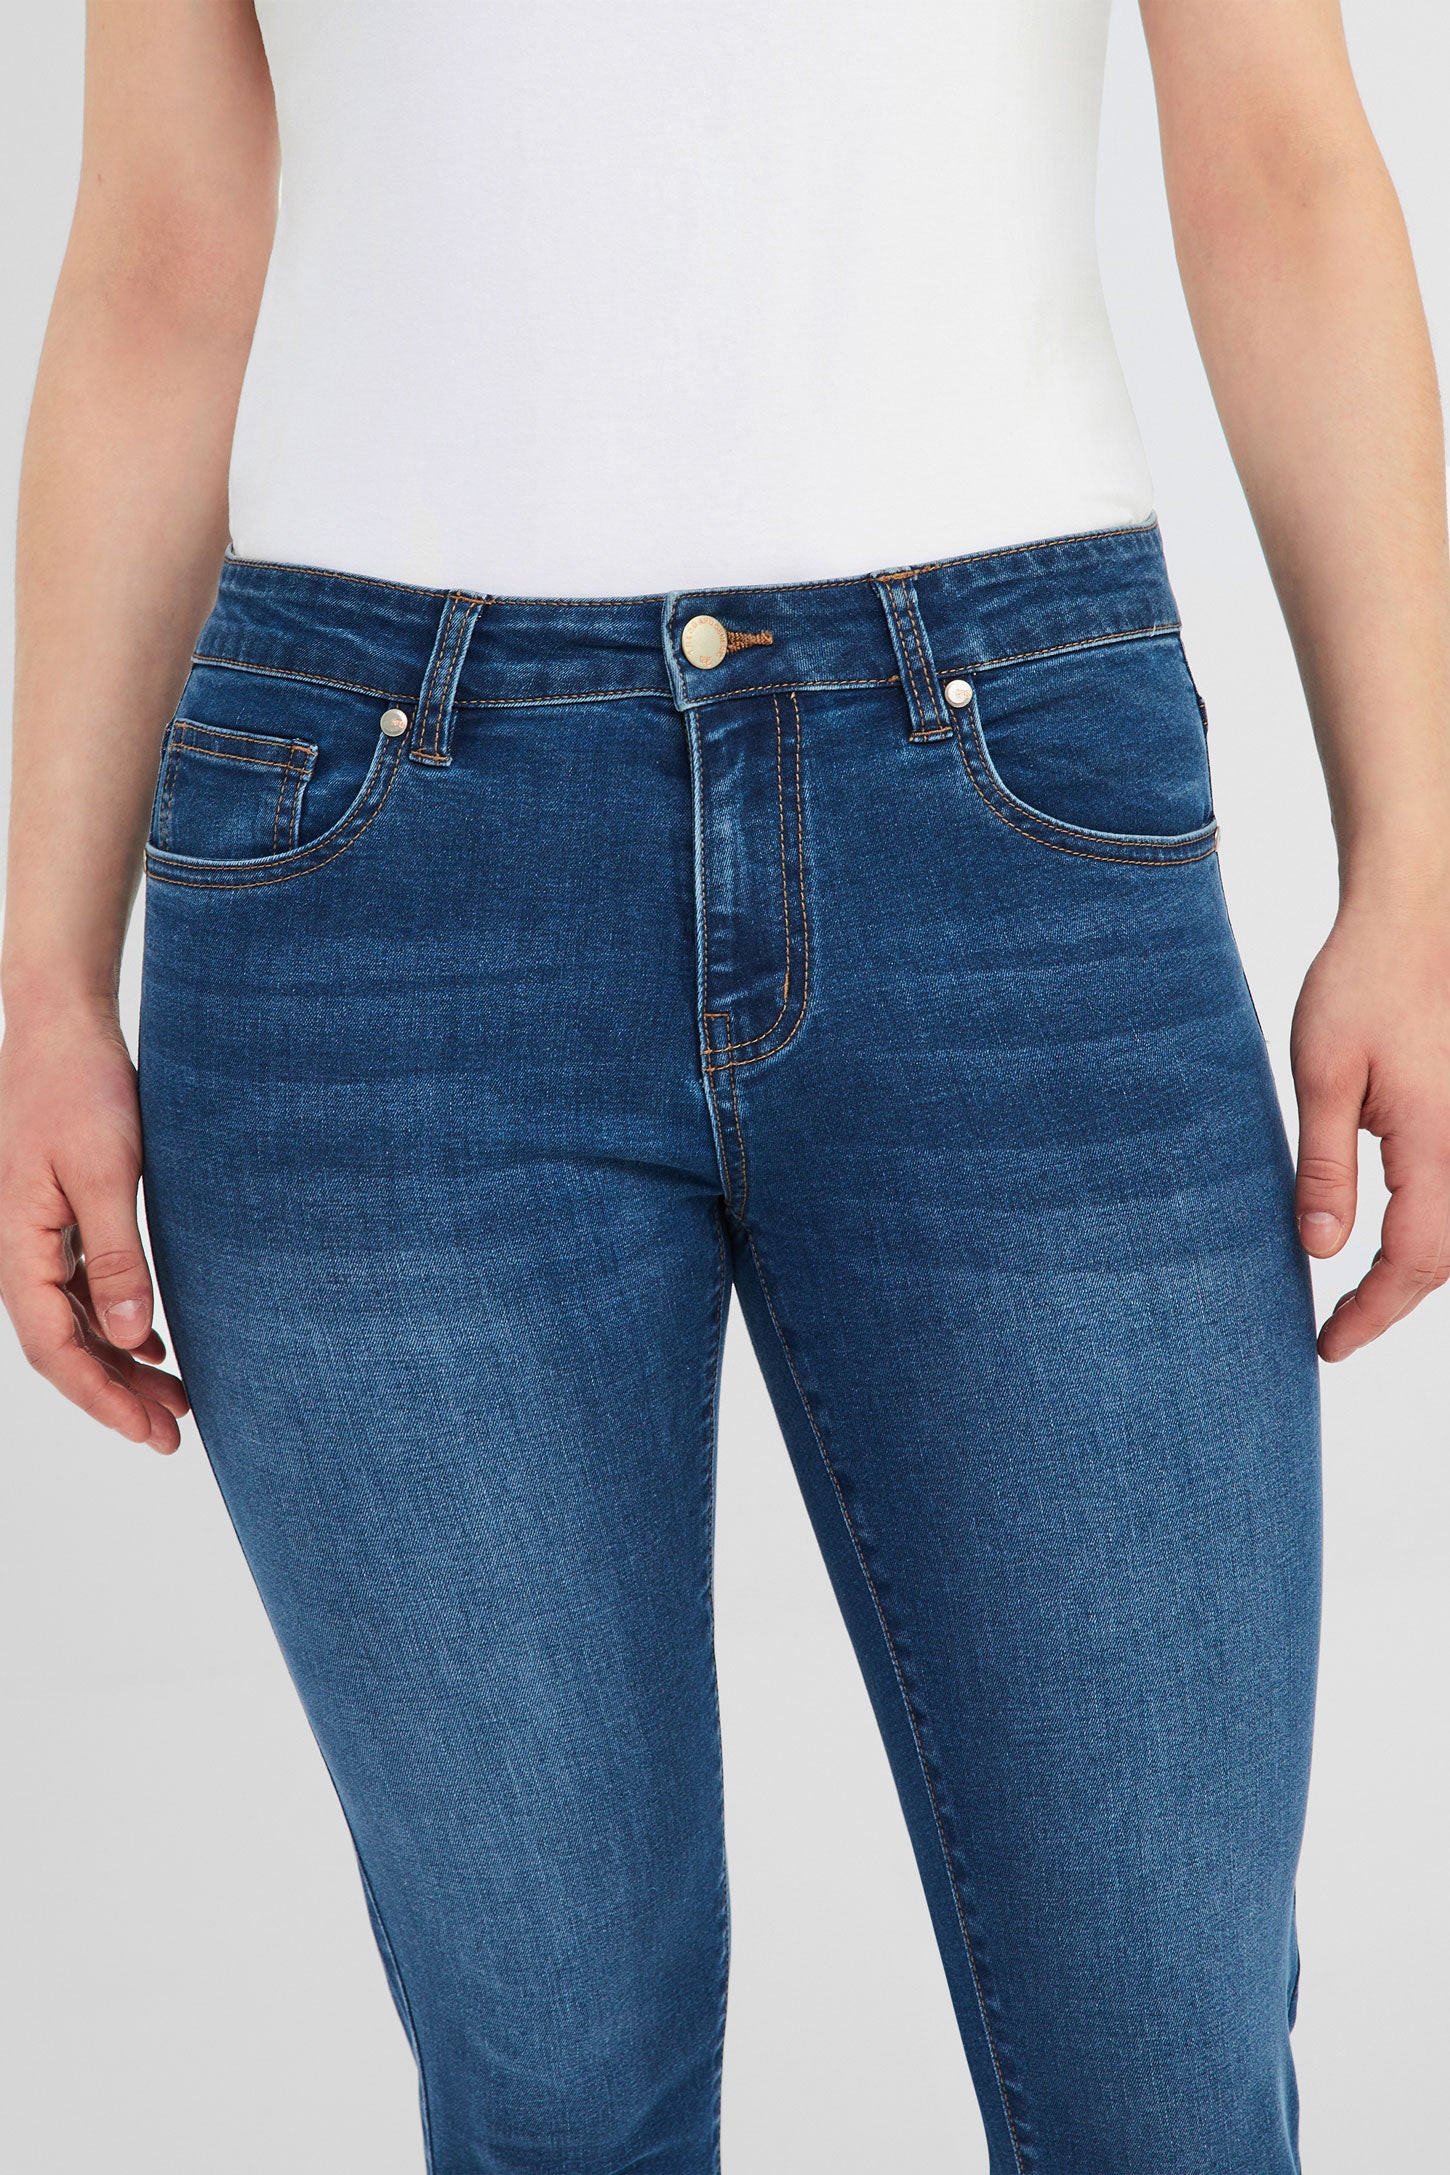 Capri 5 poches en jeans - Femme && BLEU MOYEN